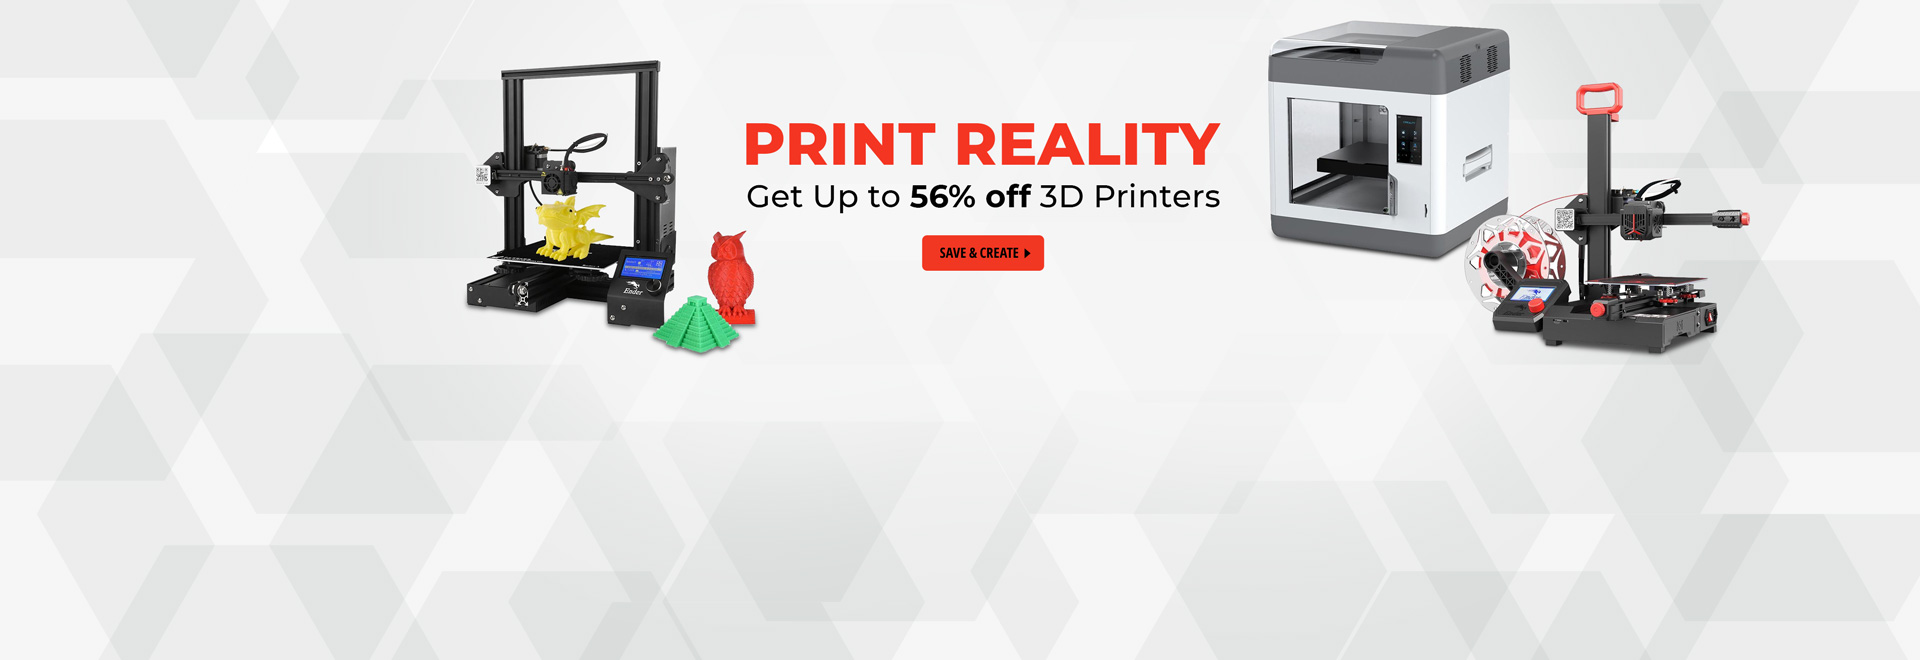 Print Reality